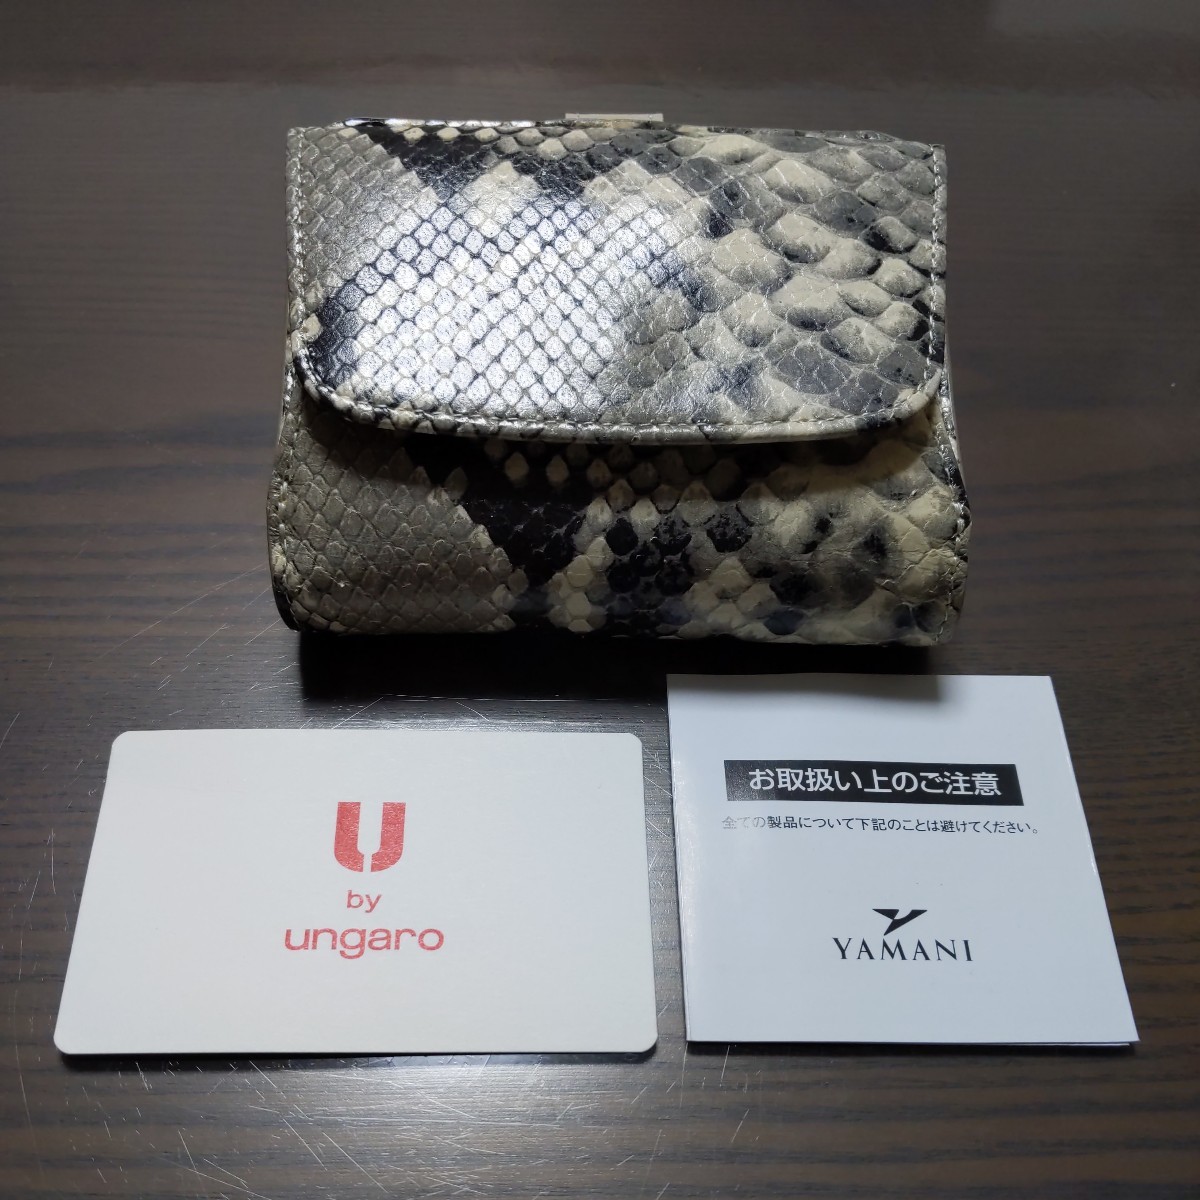  new goods *U by ungaro/ You bai Ungaro * folding twice purse box coin case # python print #